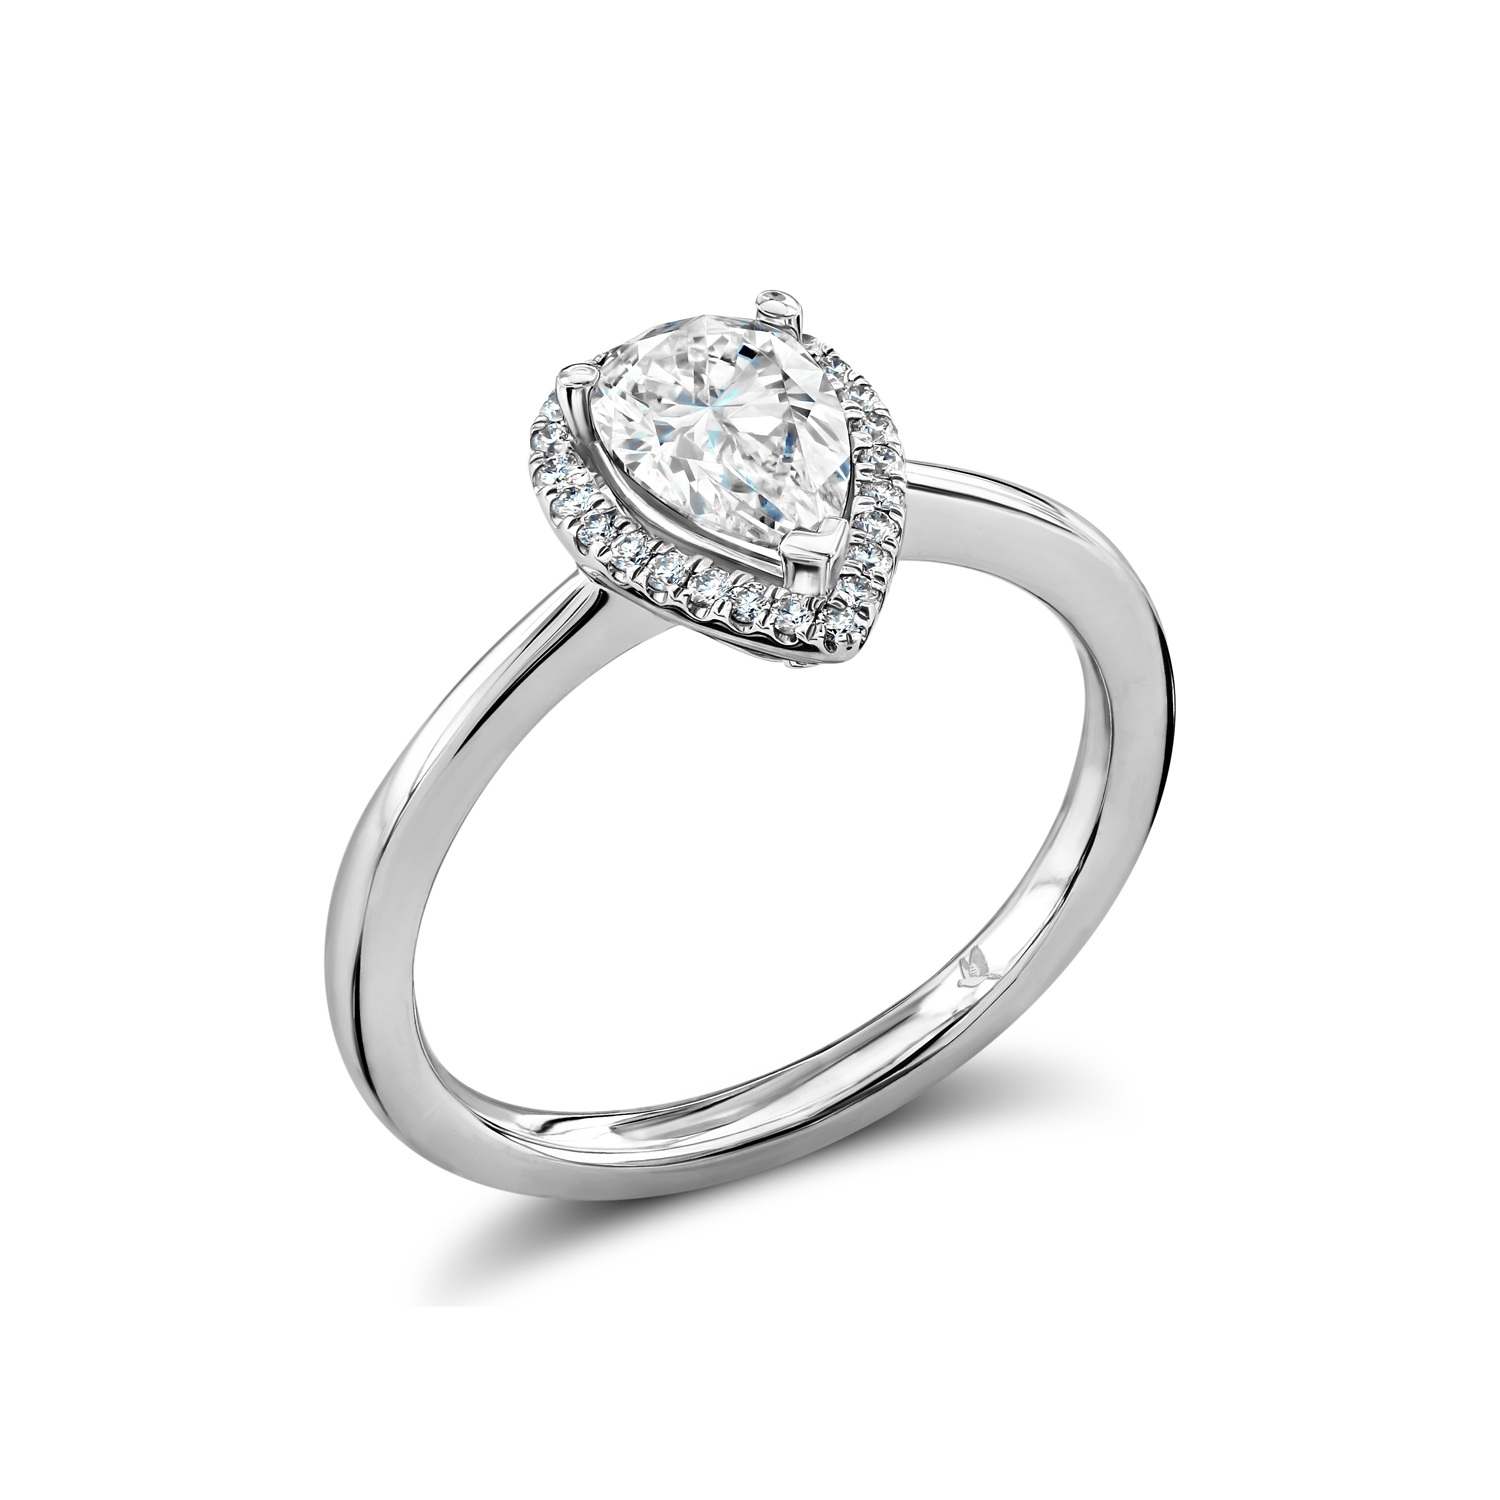 Pear shaped diamond ring with diamond halo